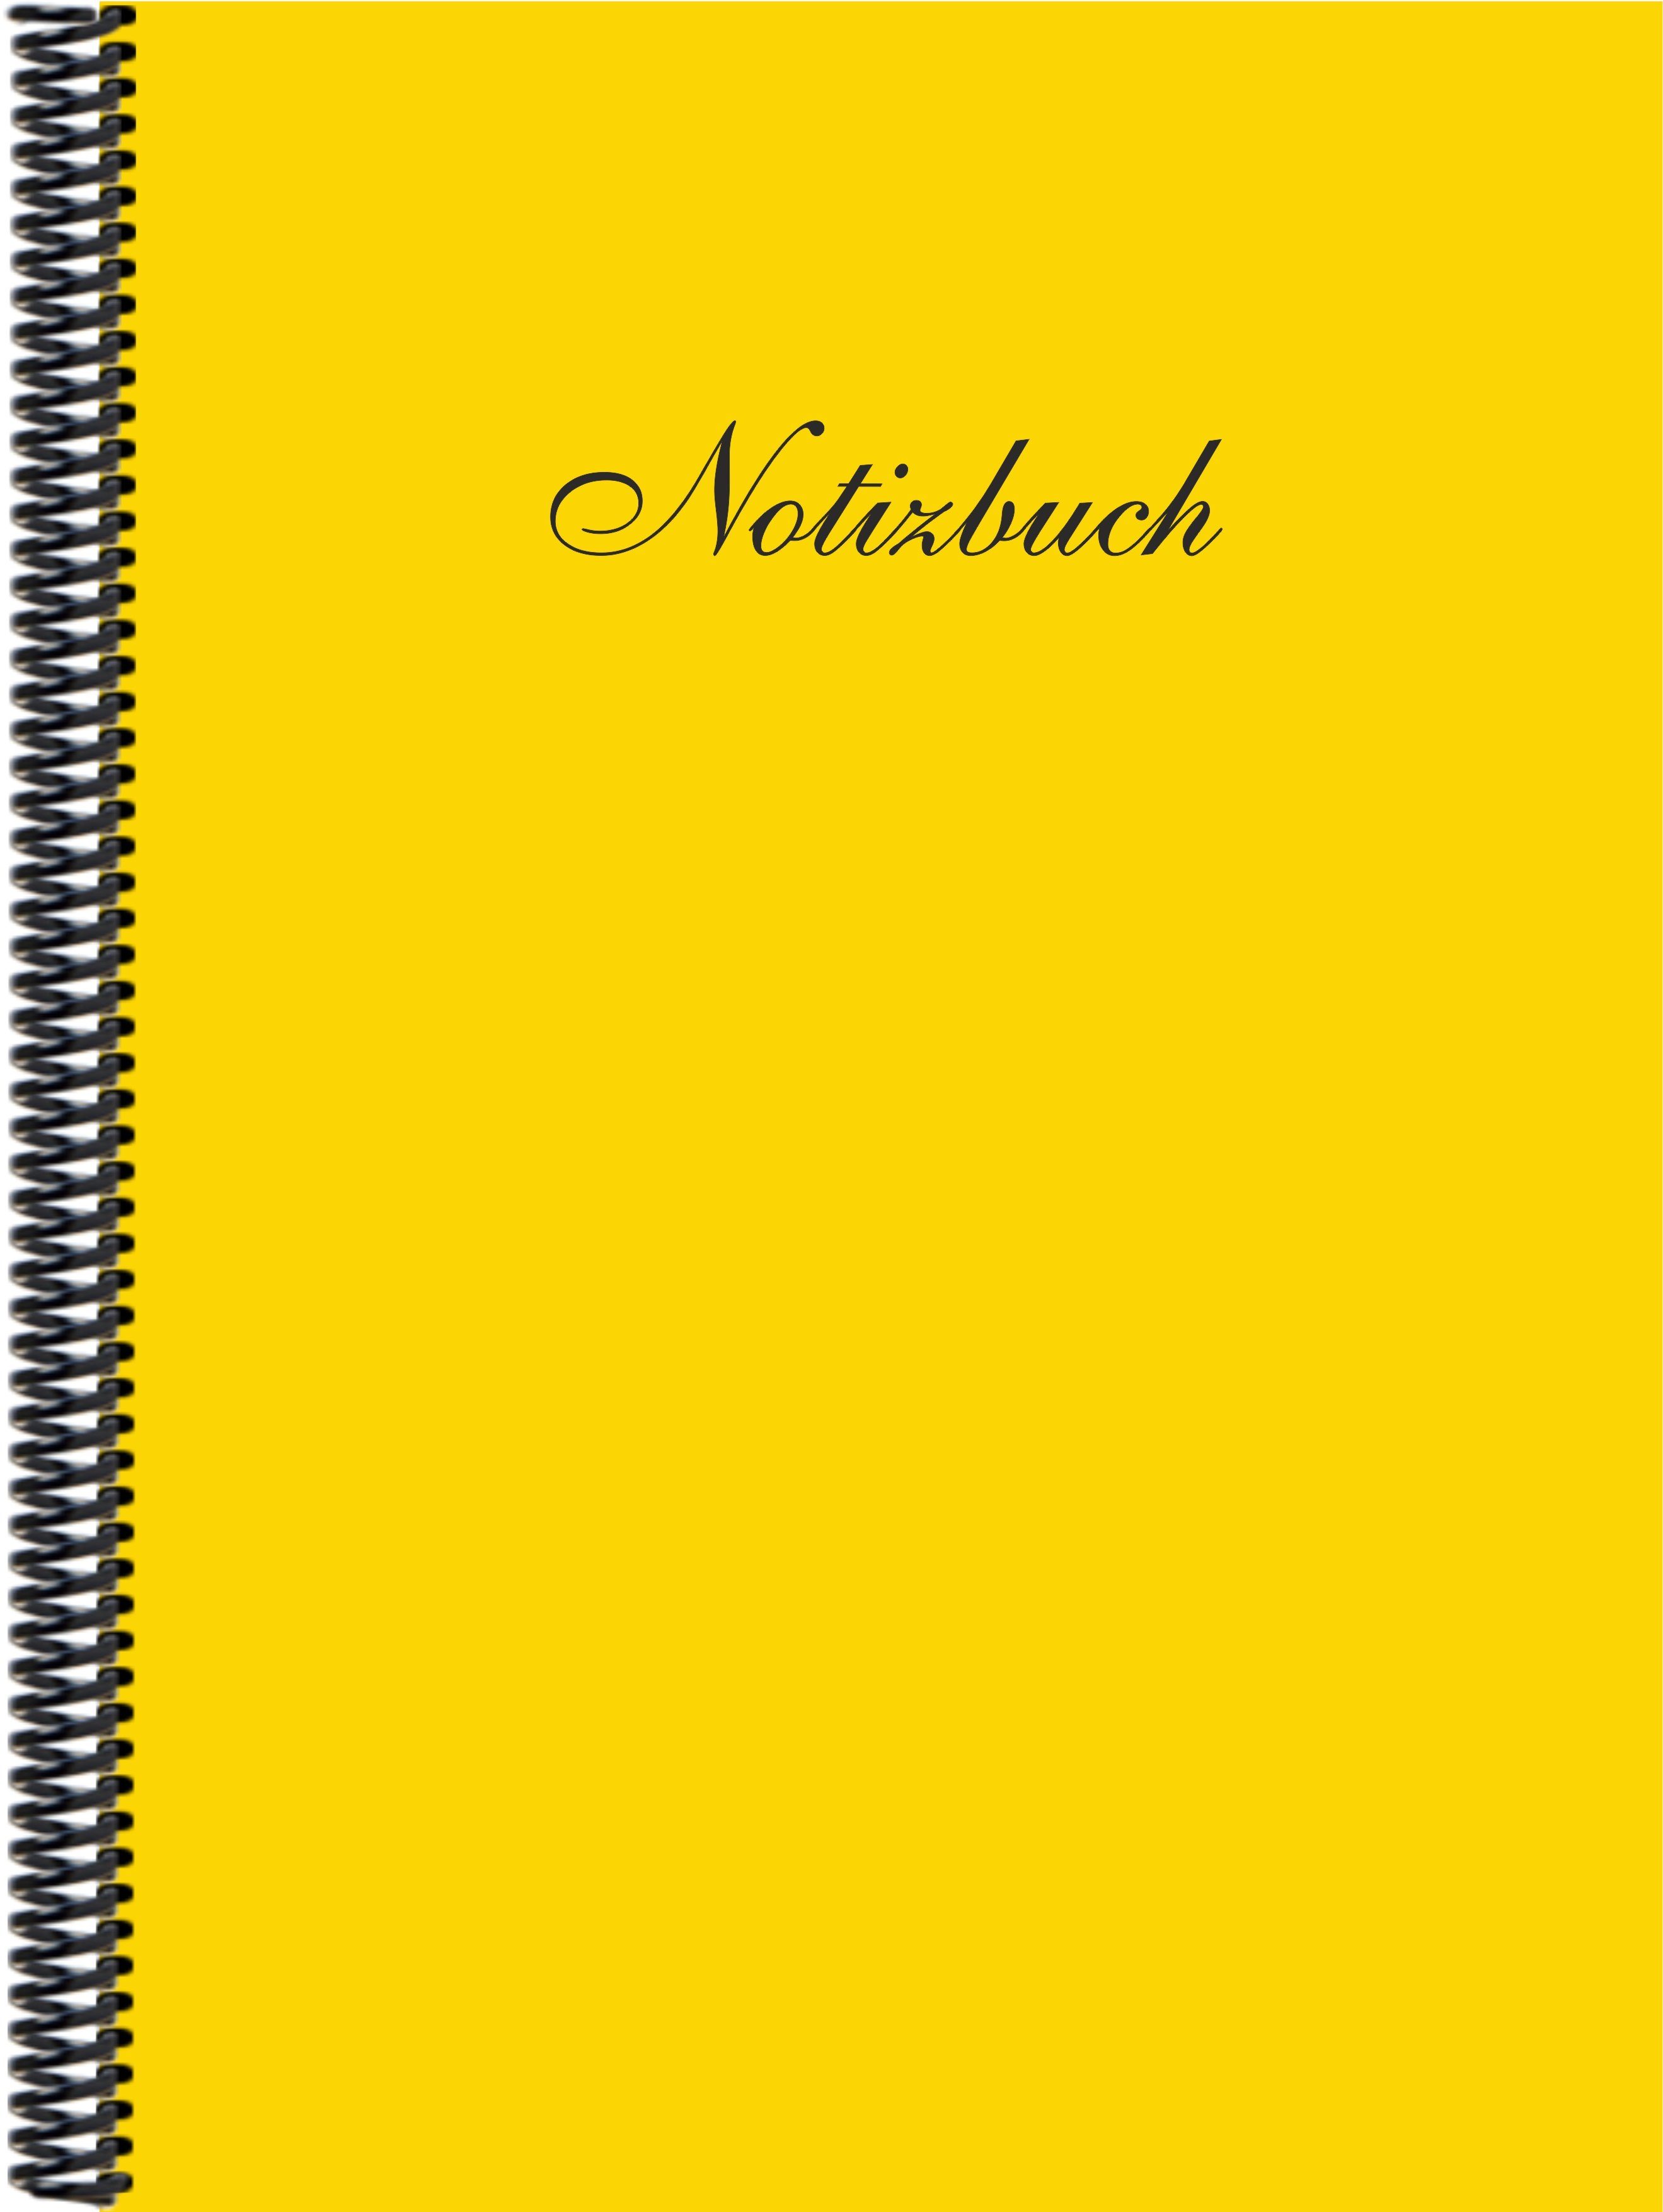 in blanko, Notizbuch bananengelb Gmbh Notizbuch der Verlag E&Z Trendfarbe DINA4